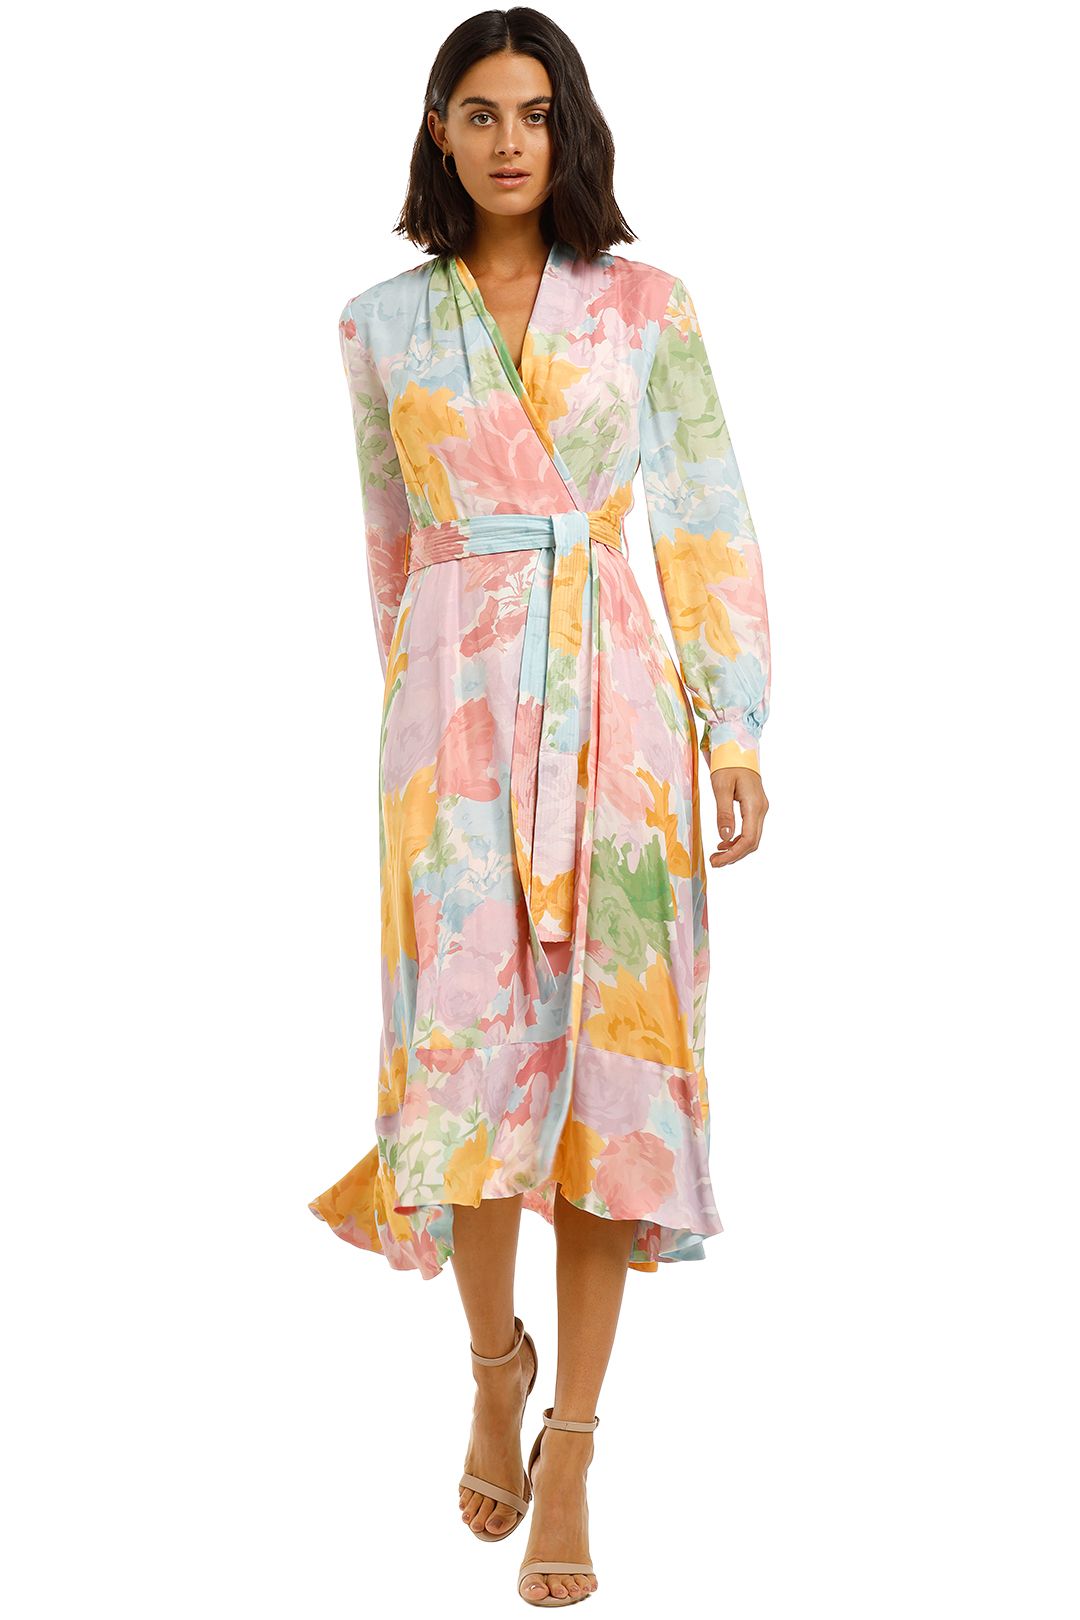 Stine-Goya-Reflection-Dress-Rose-Garden-Pastel-Front